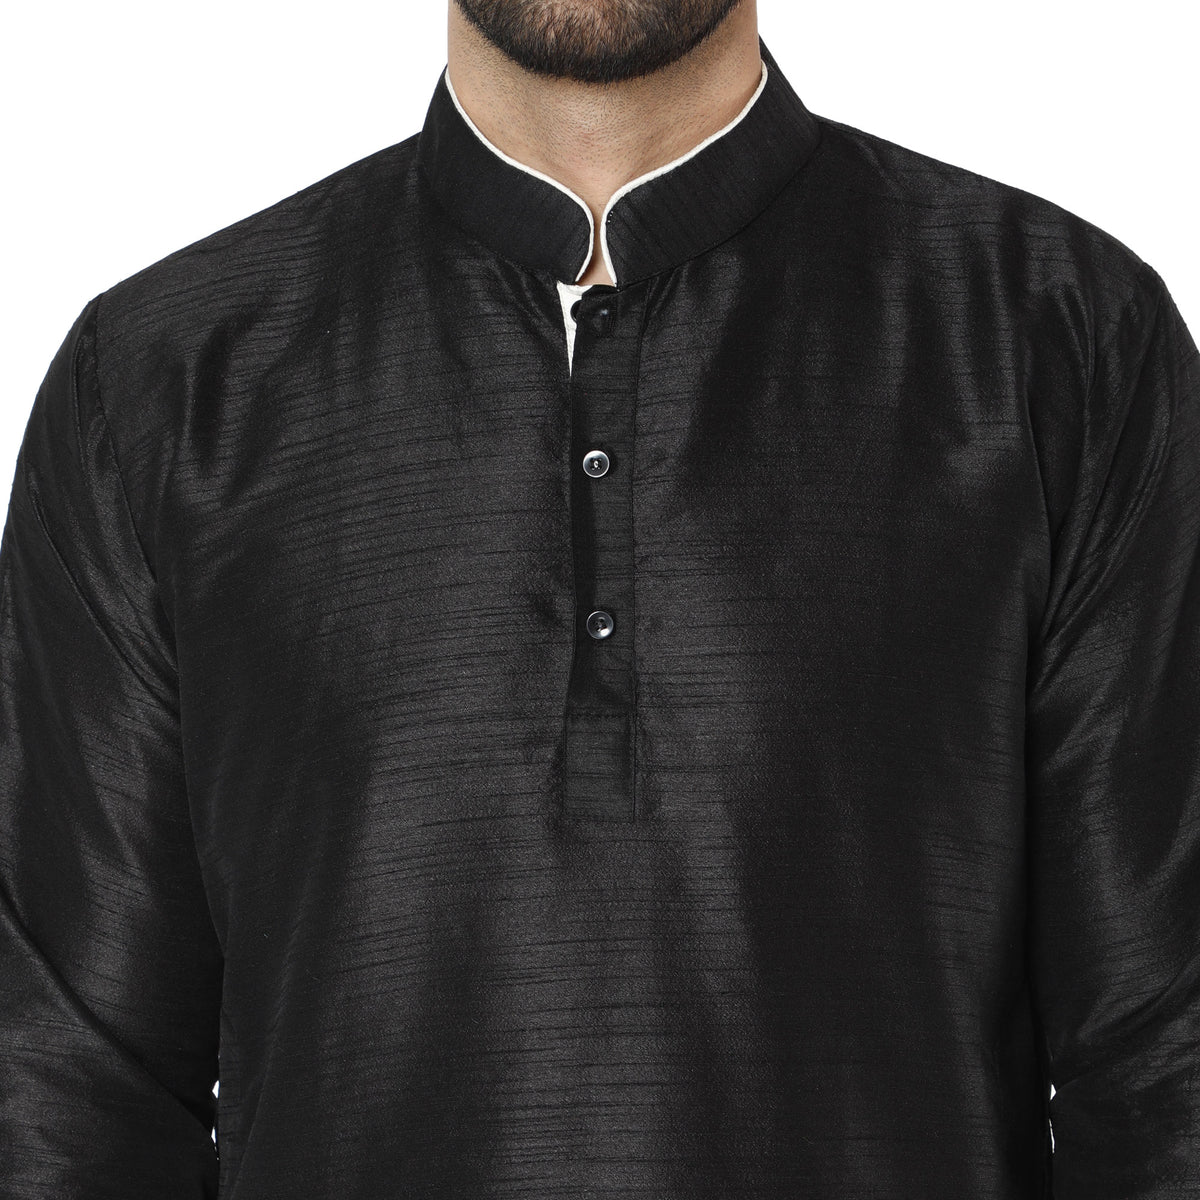 SKAVIJ Mens Tunic Khadi Cotton Kurta Shirt Casual Clothing Black, X-Large